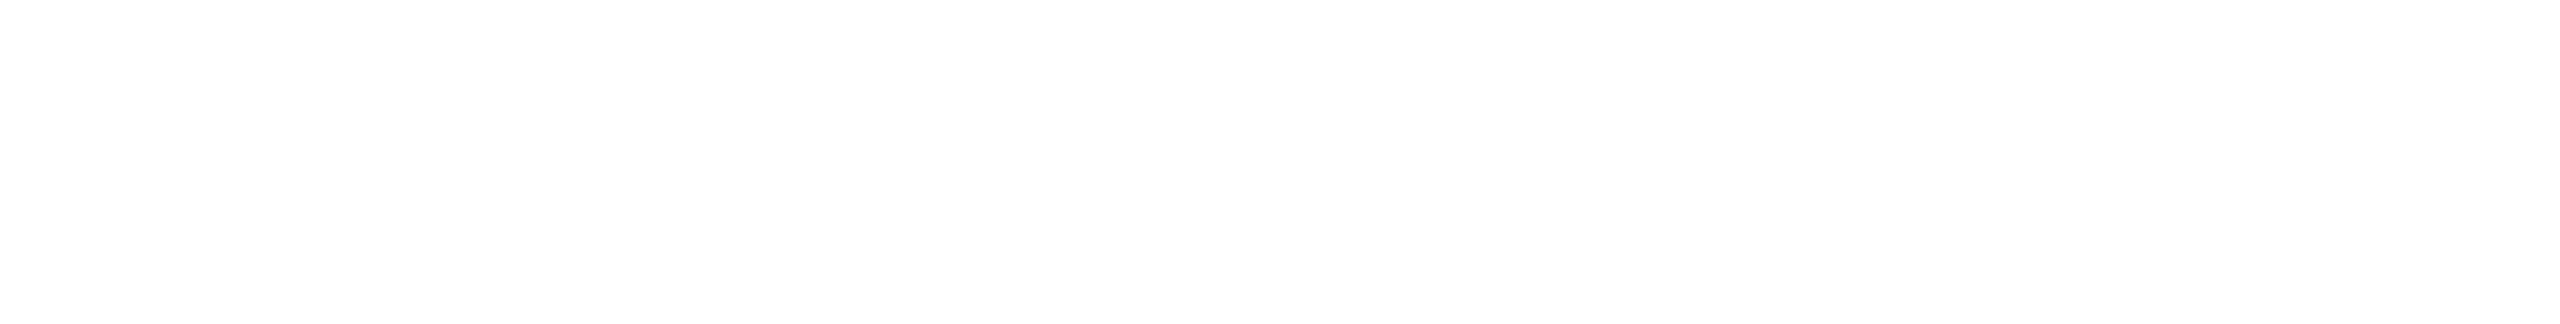 logo hypebeast